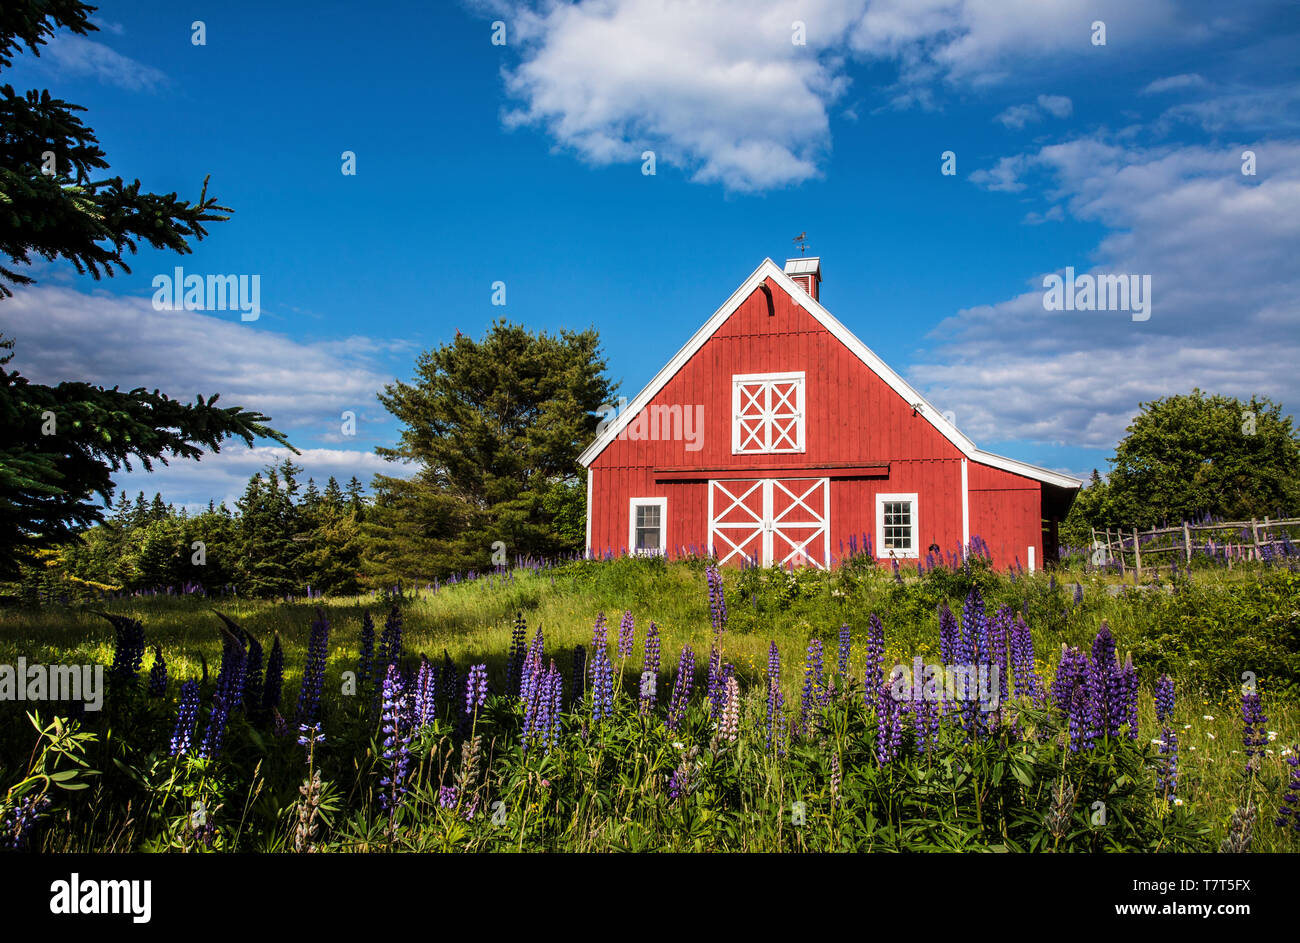 Rote Scheune und violette Lupinenblumen, blauer Himmel, Acadia National Park, Maine, New England US Spring Farm Scene FS 11,46 MB 300ppi Stockfoto